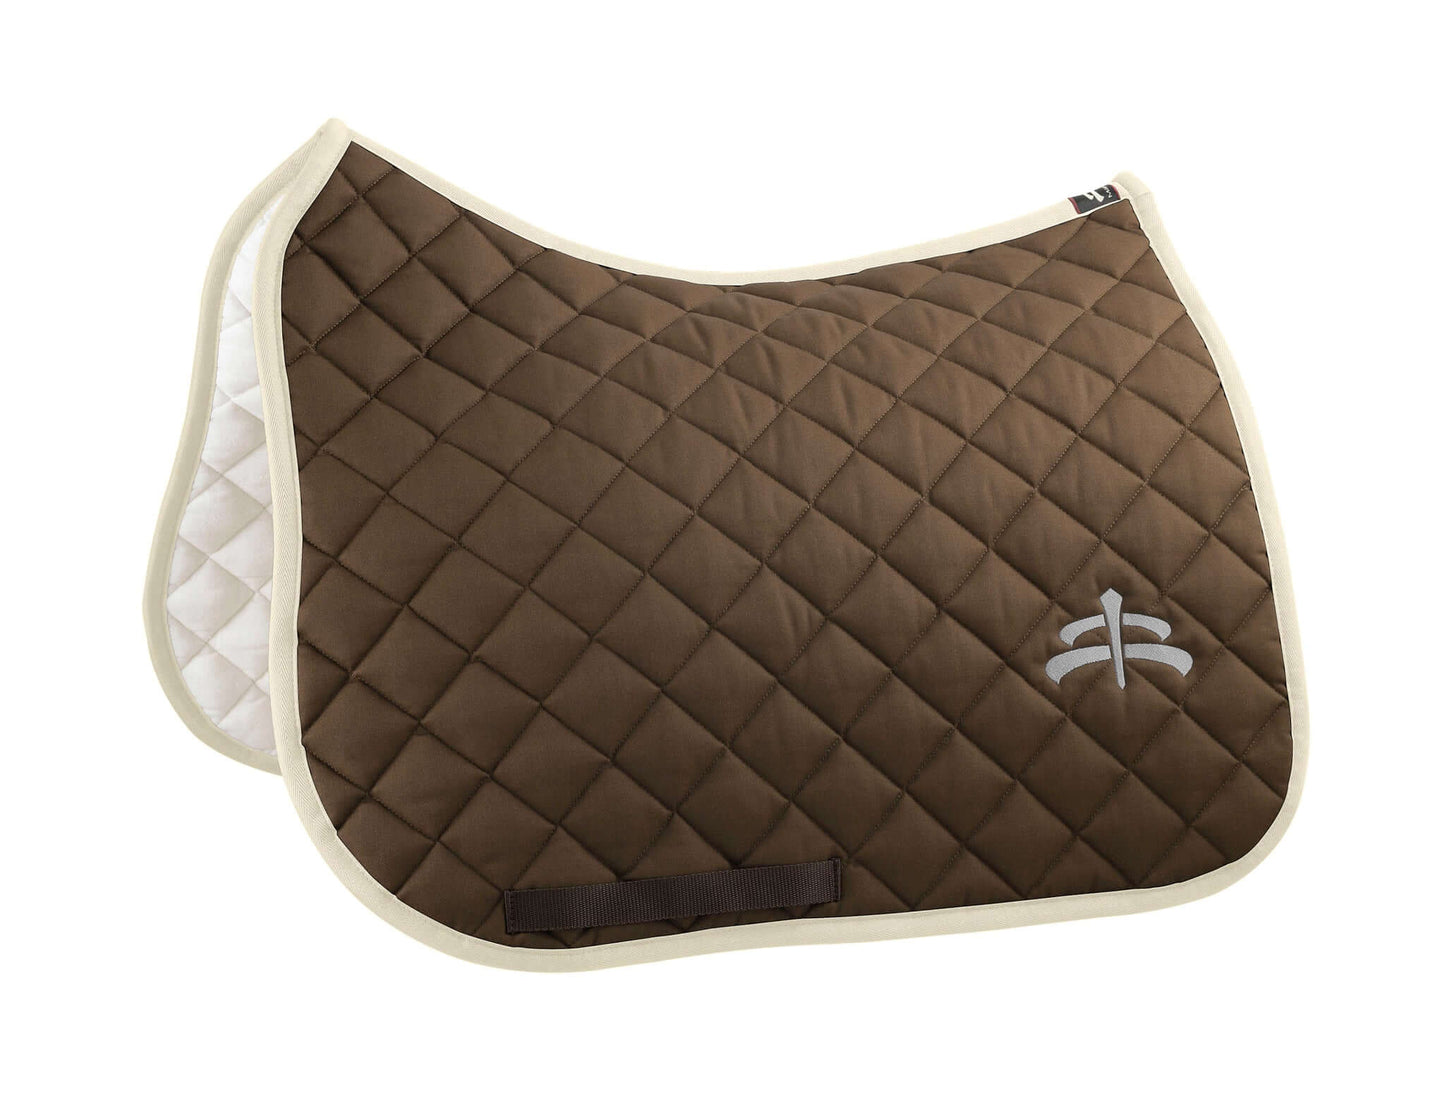 Dressage wadded saddle pad with Makebe logo